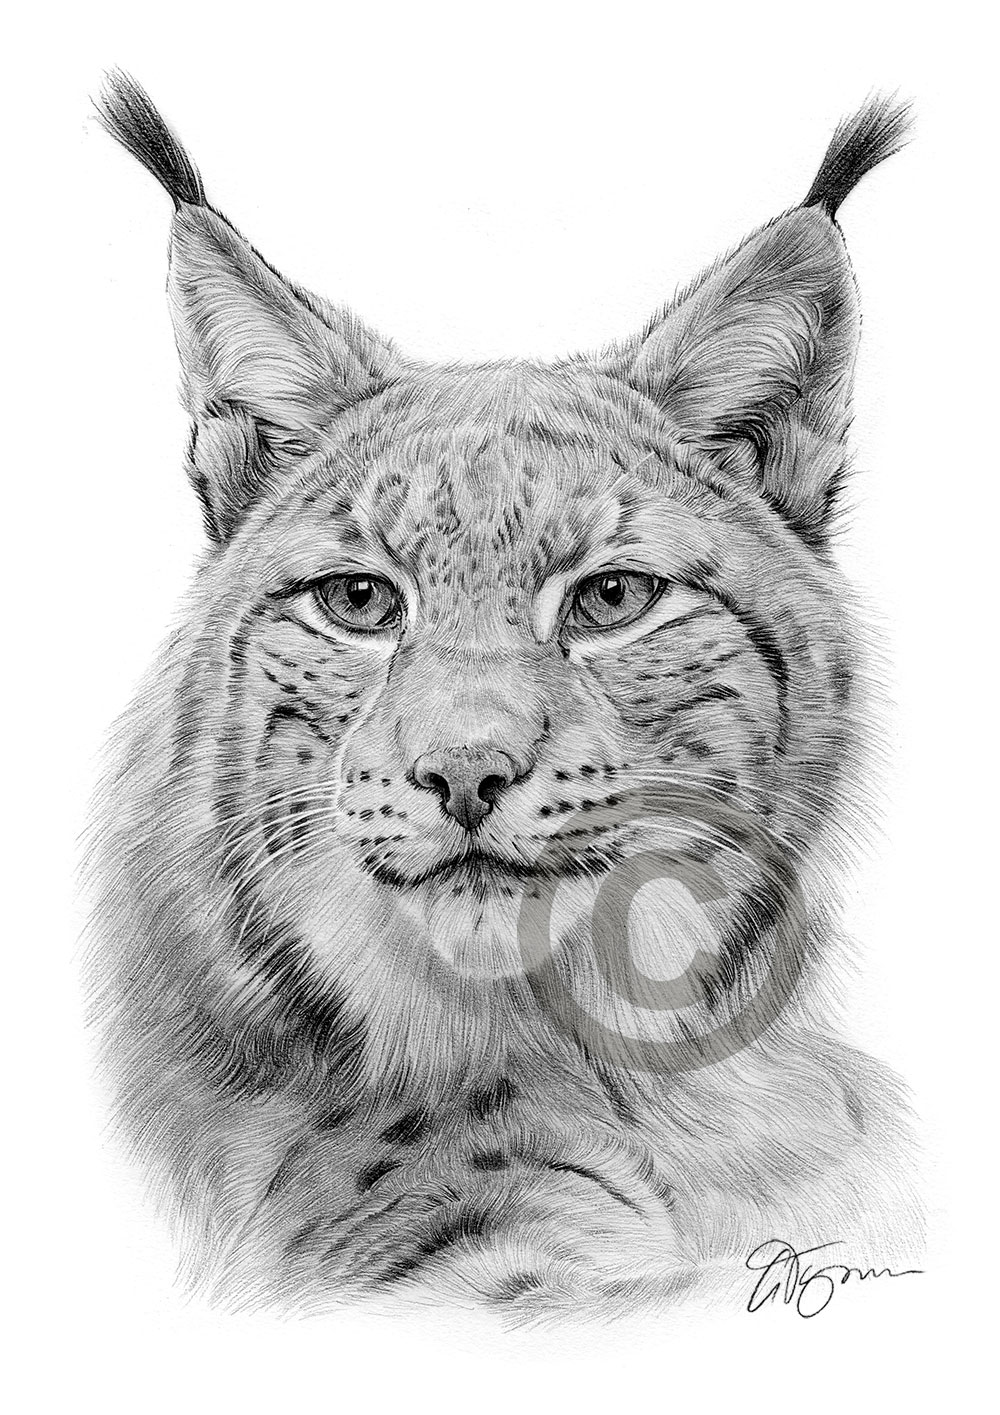 Pencil drawing of a lynx by UK artist Gary Tymon